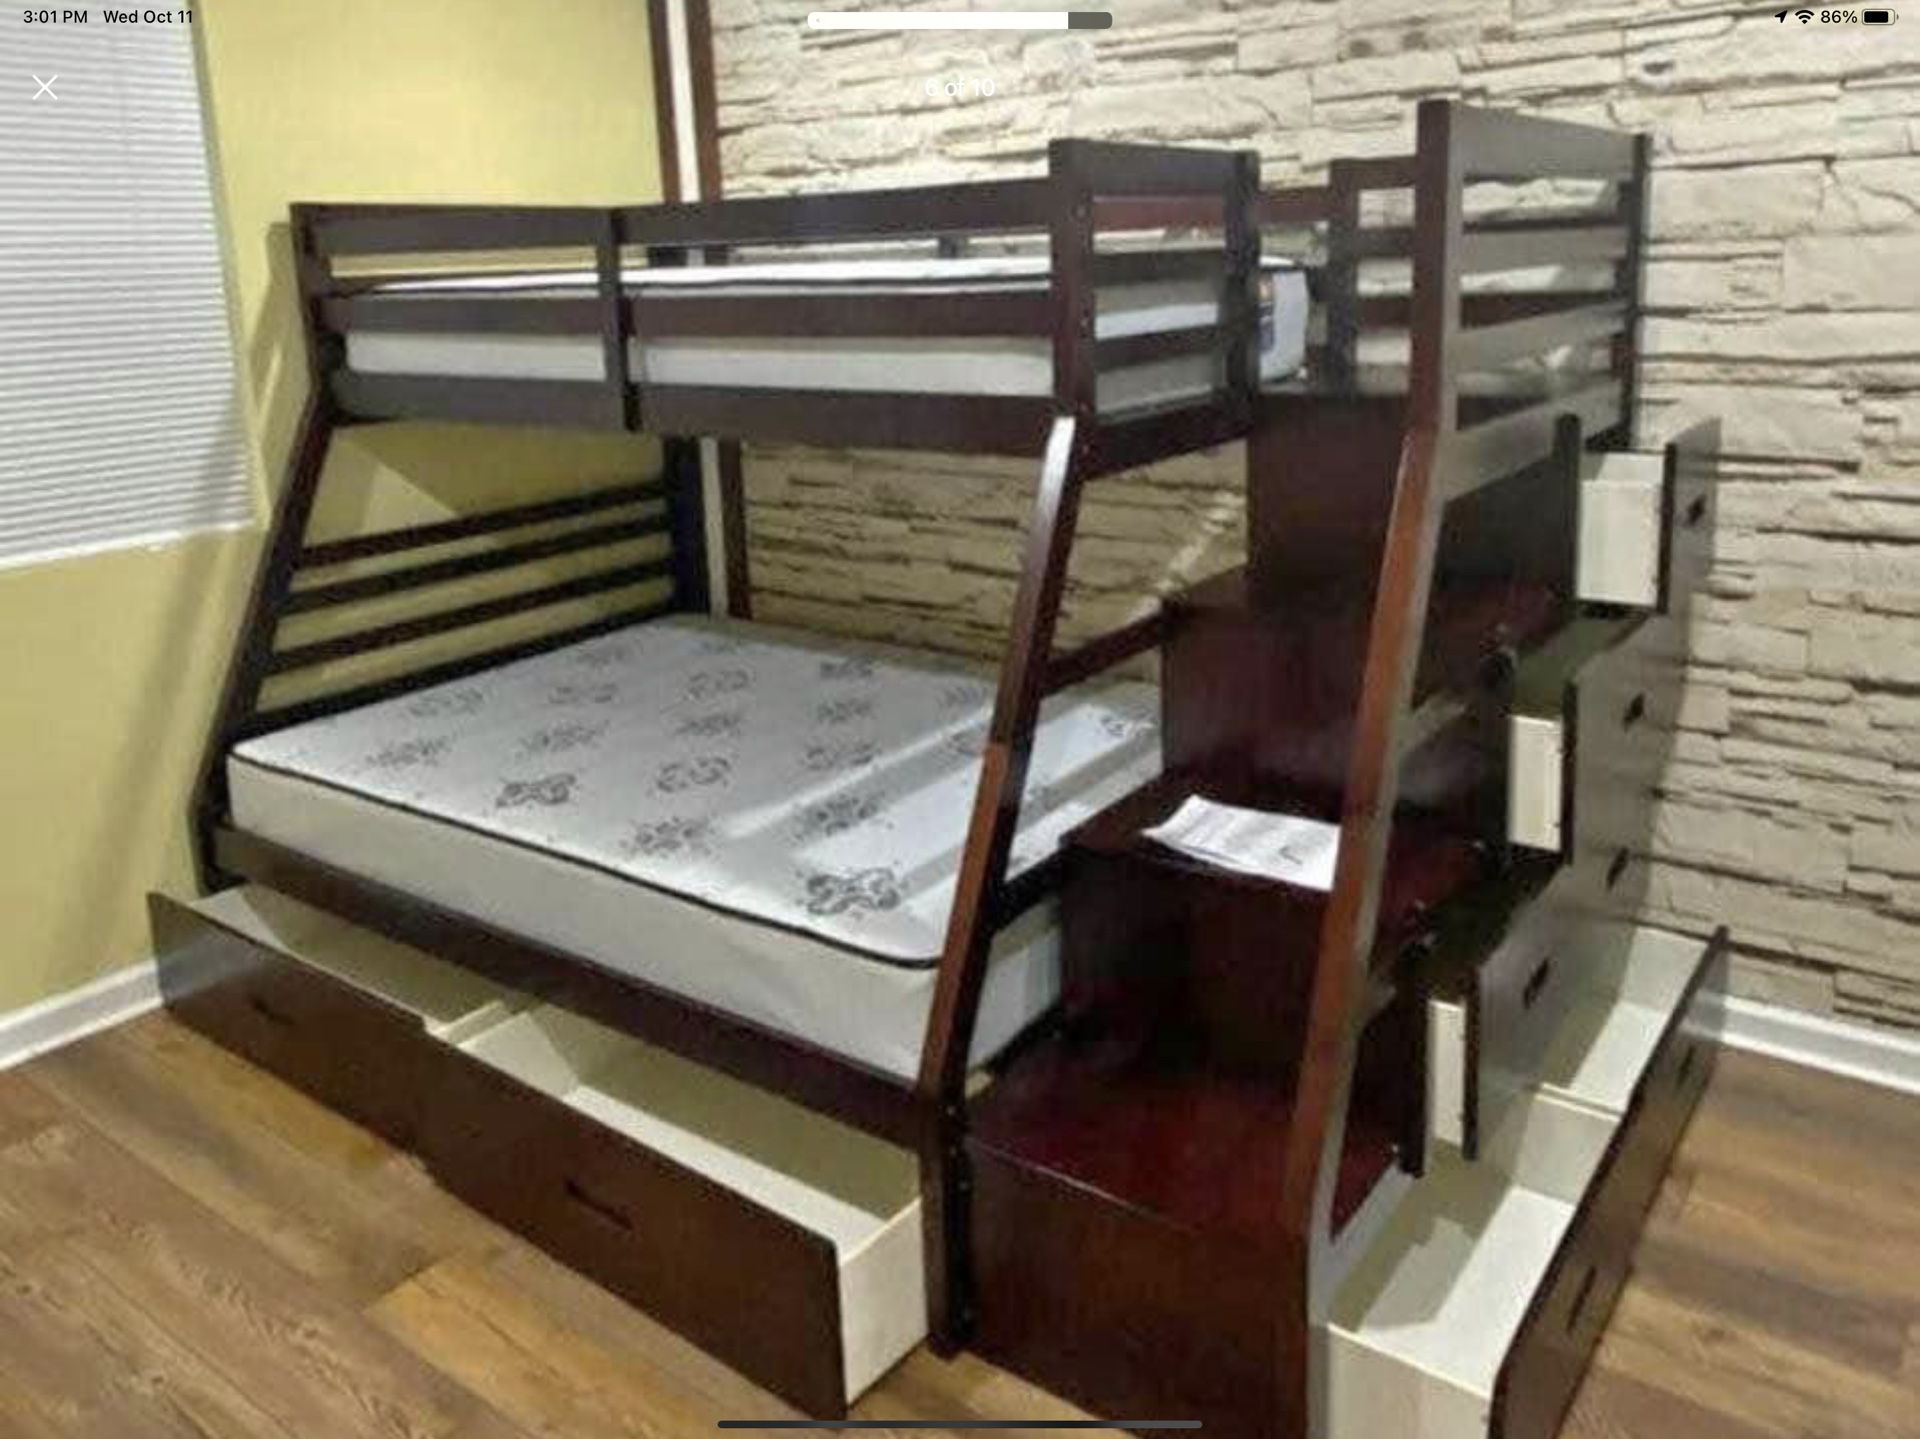 Literas Disponibles / Bunk Beds